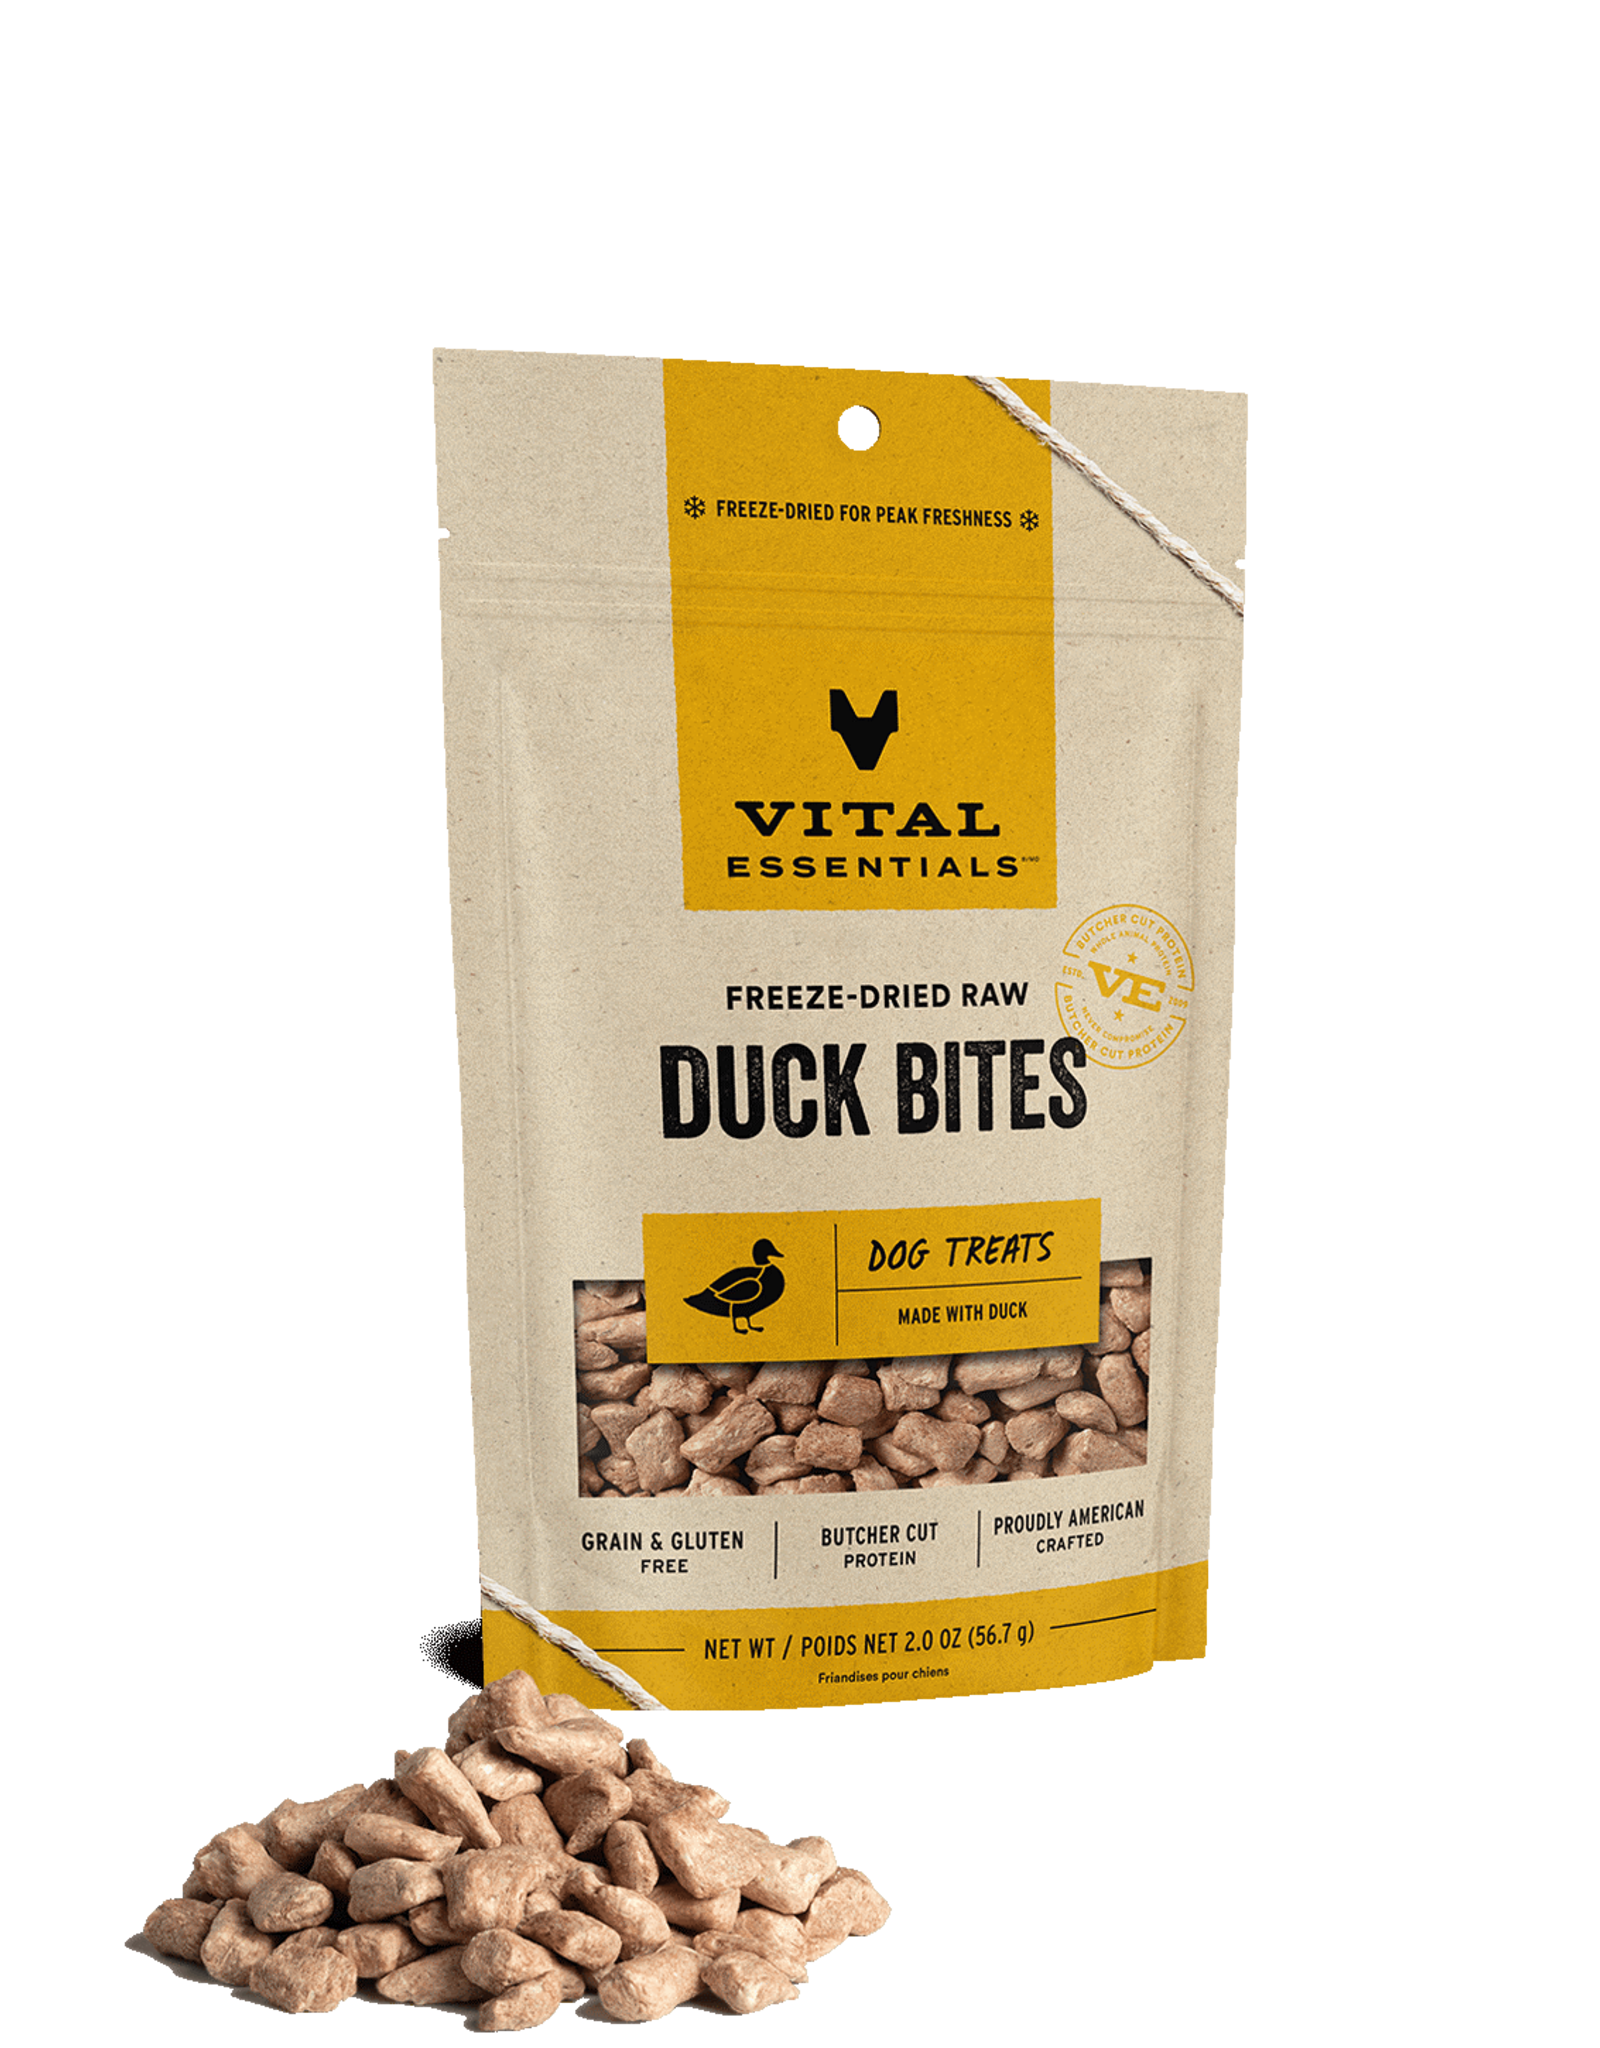 Vital Essentials Vital Essentials Dog Treat Duck Bites